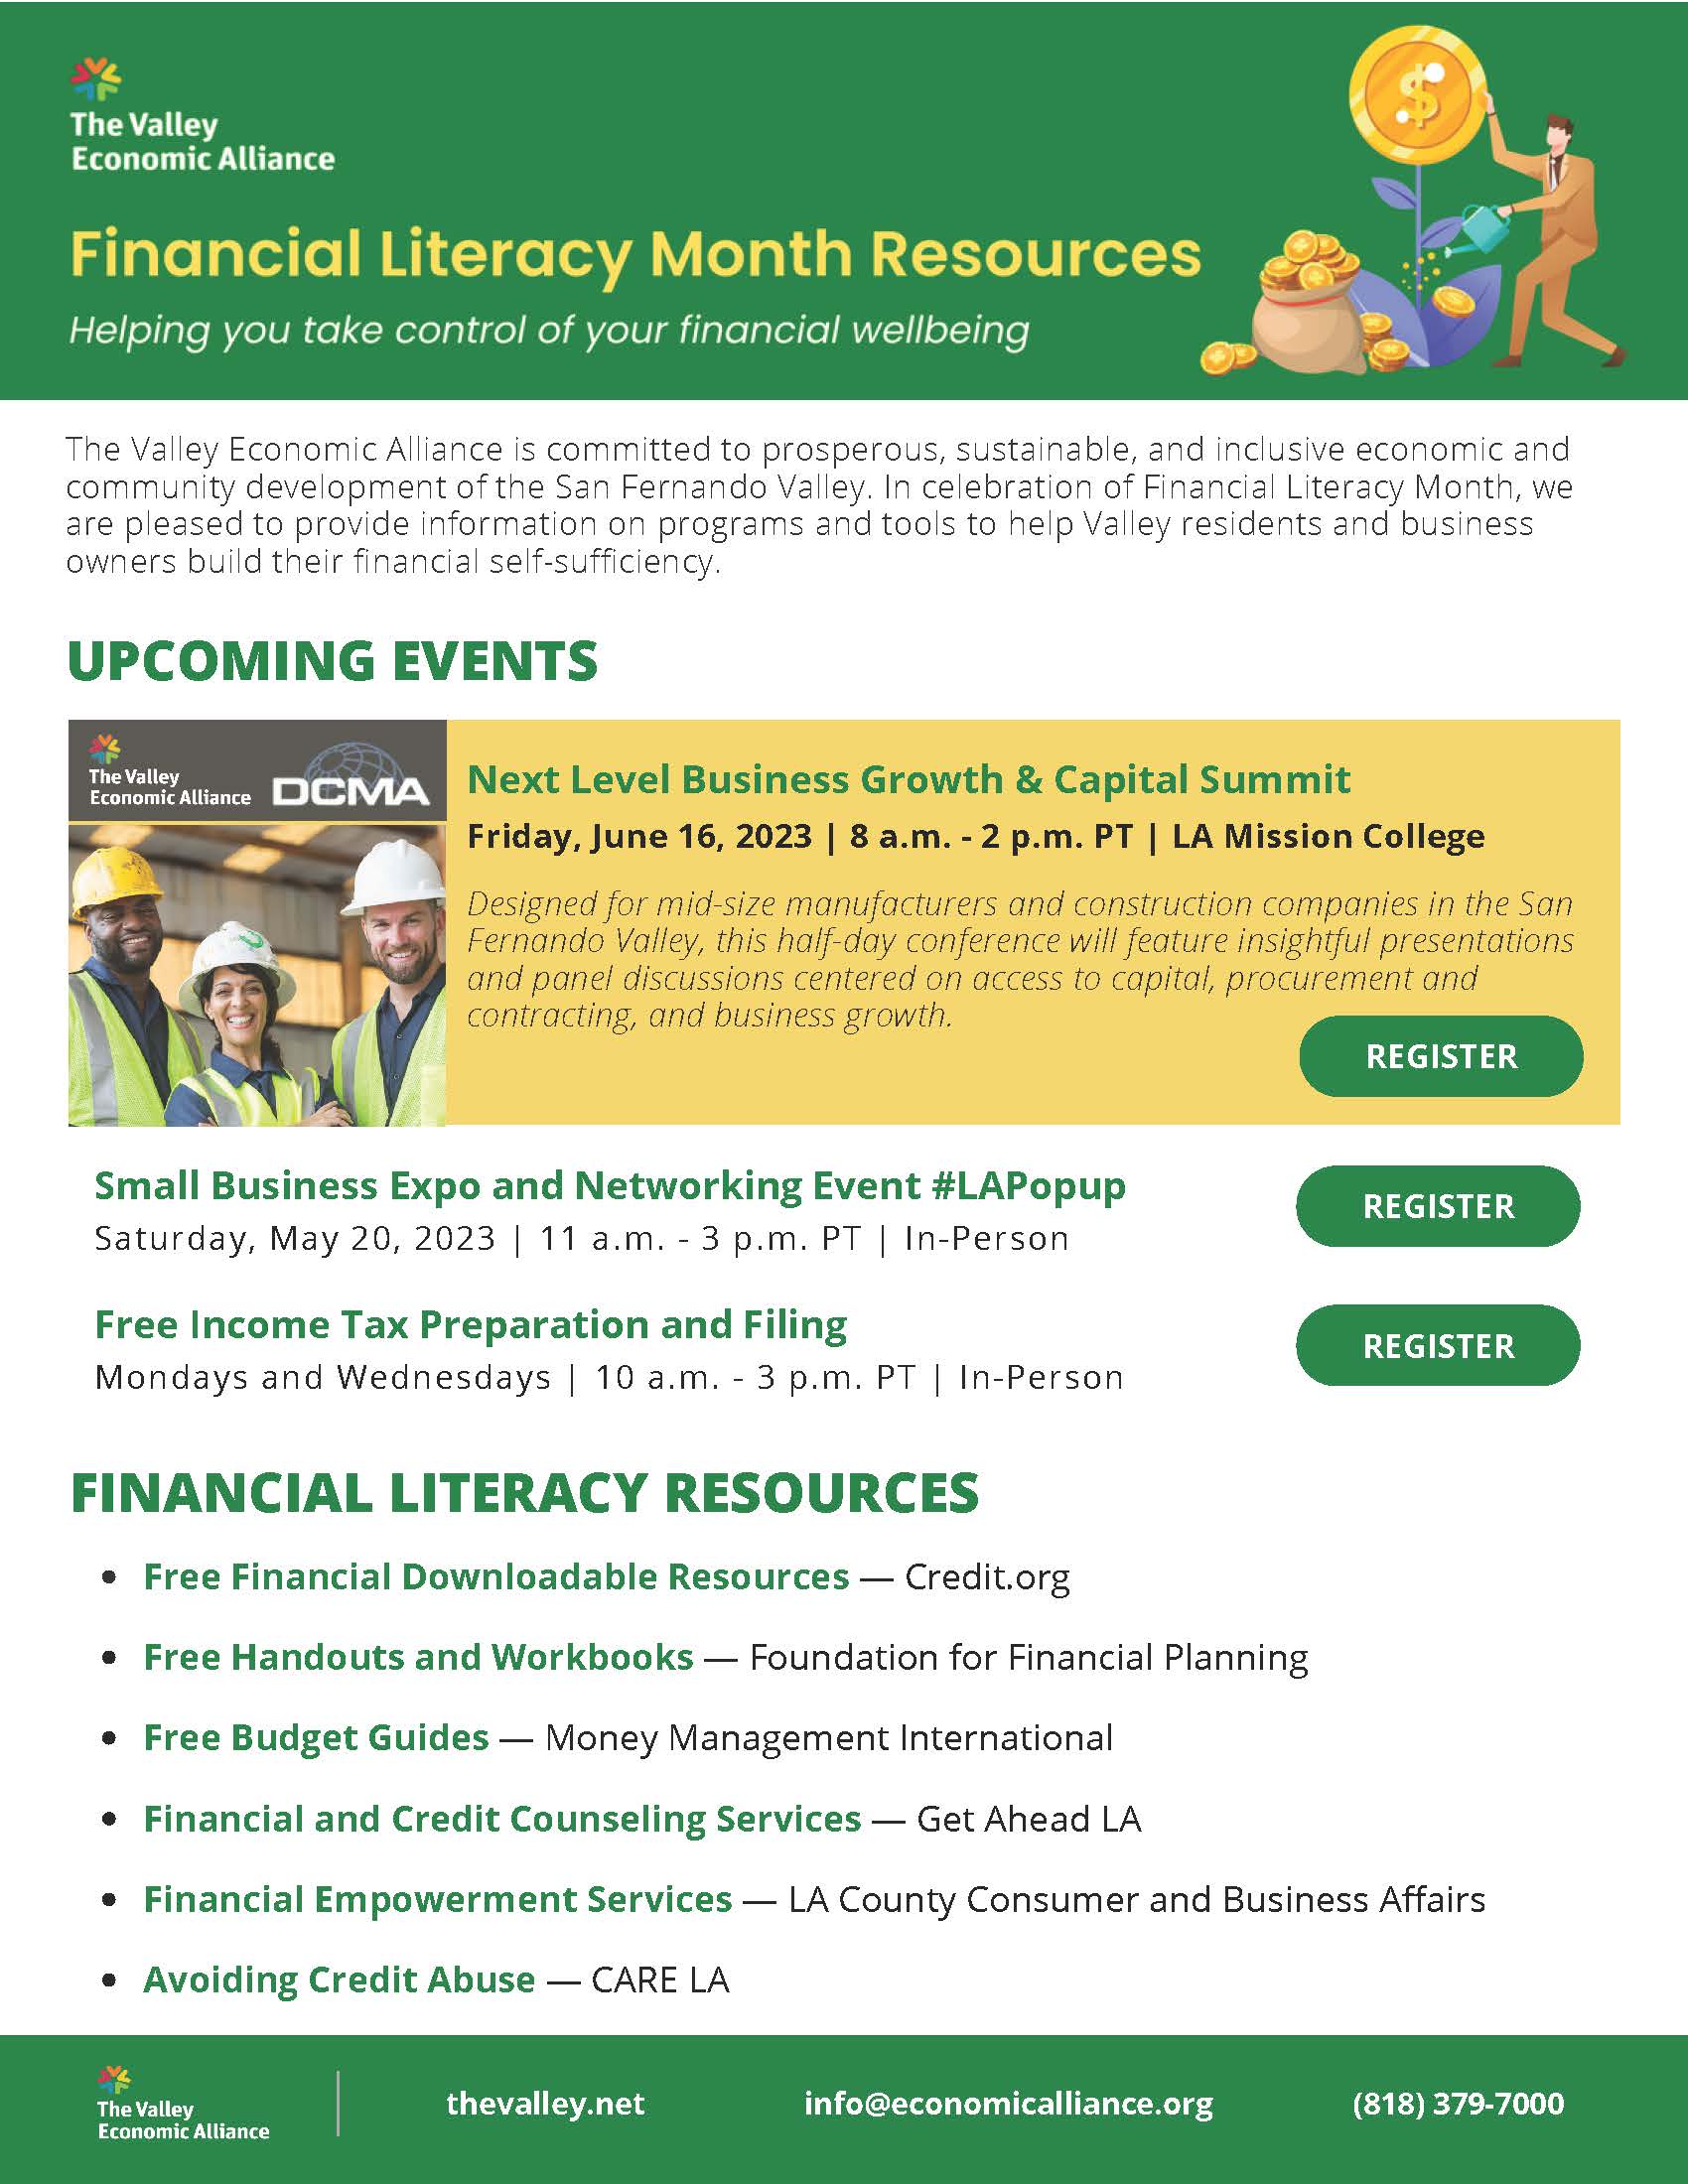 Financial Literacy Month Flyer_4-5-23